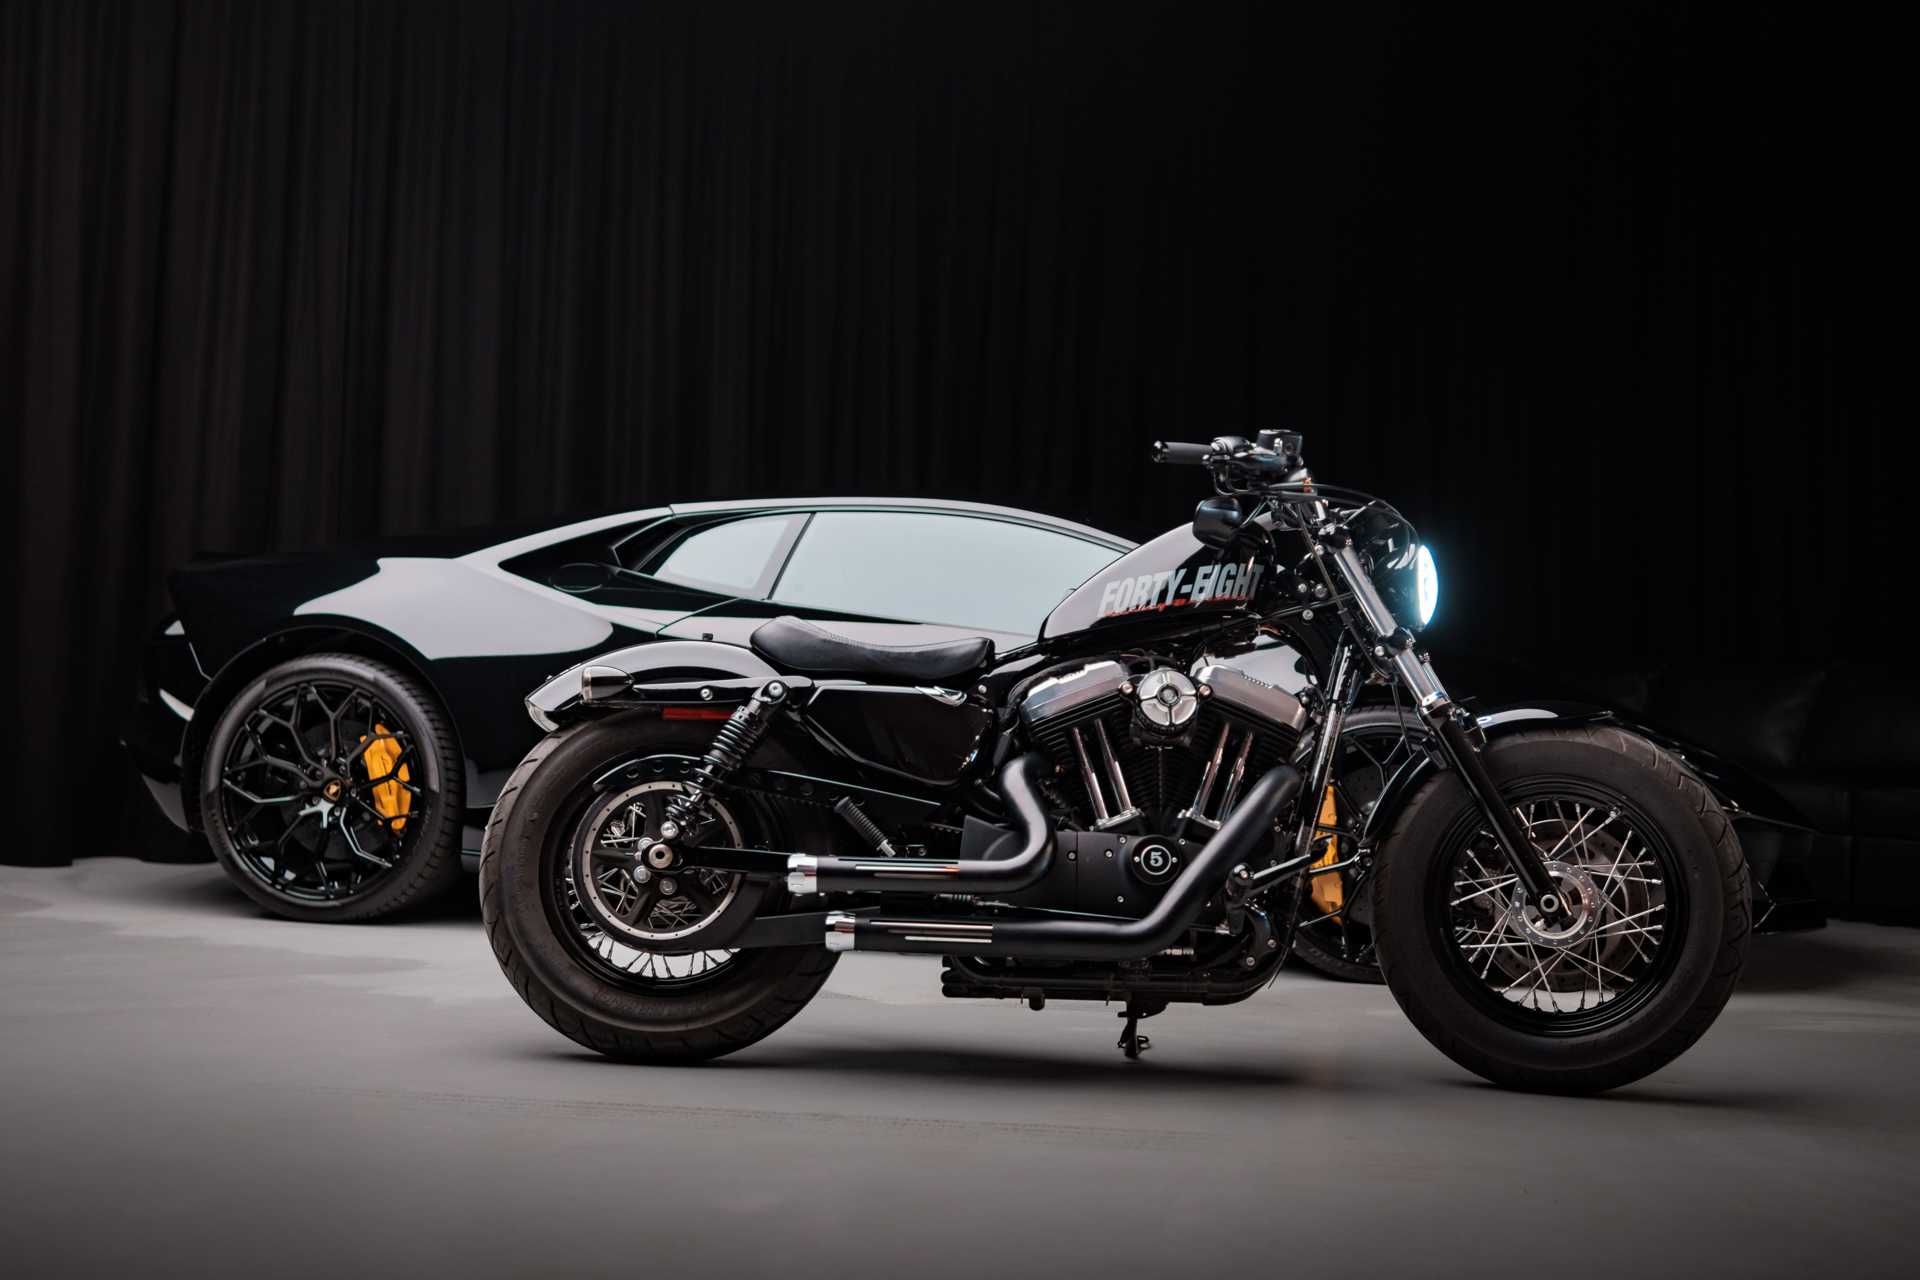 Harley-Davidson Sportster 1200 Forty-Eight